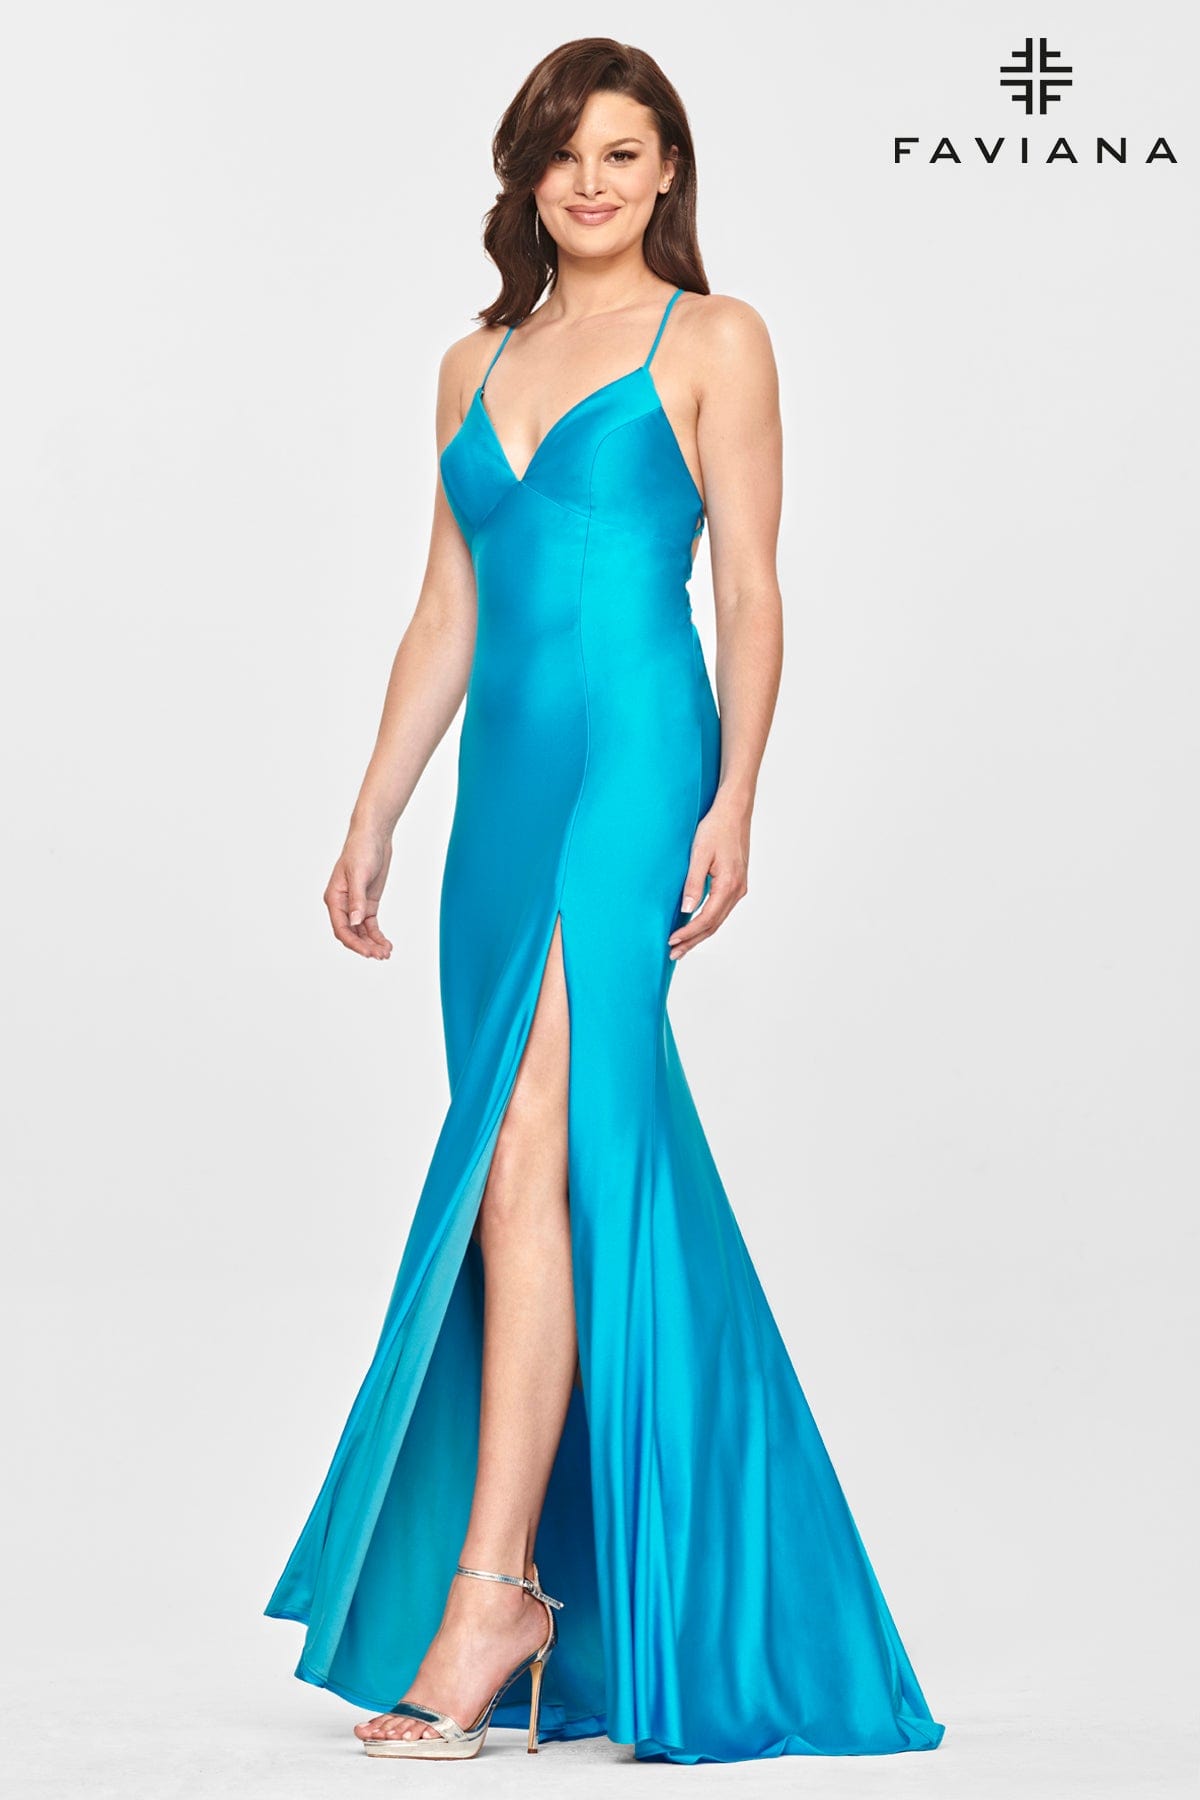 Sea Blue V Neckline Prom Dress With Stretch Fabric And Corset Back